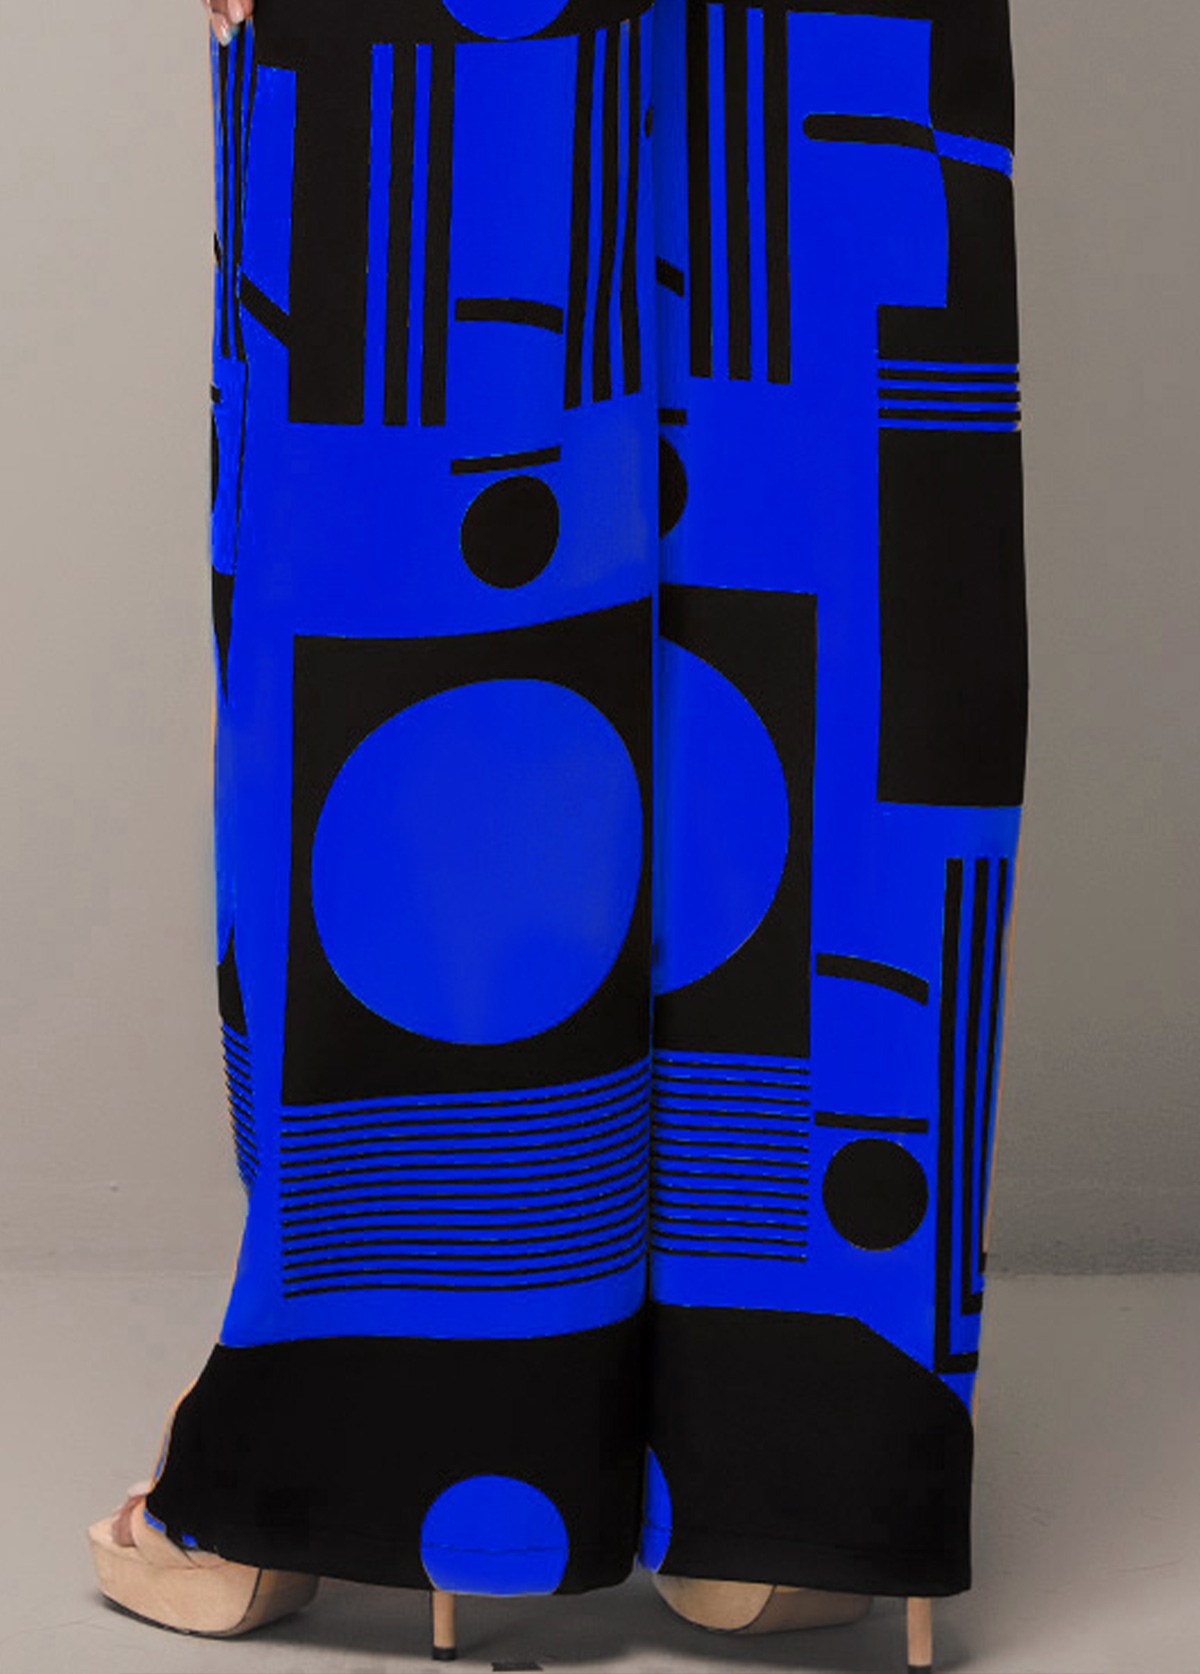 Royal Blue Pocket Geometric Print Sleeveless Jumpsuit